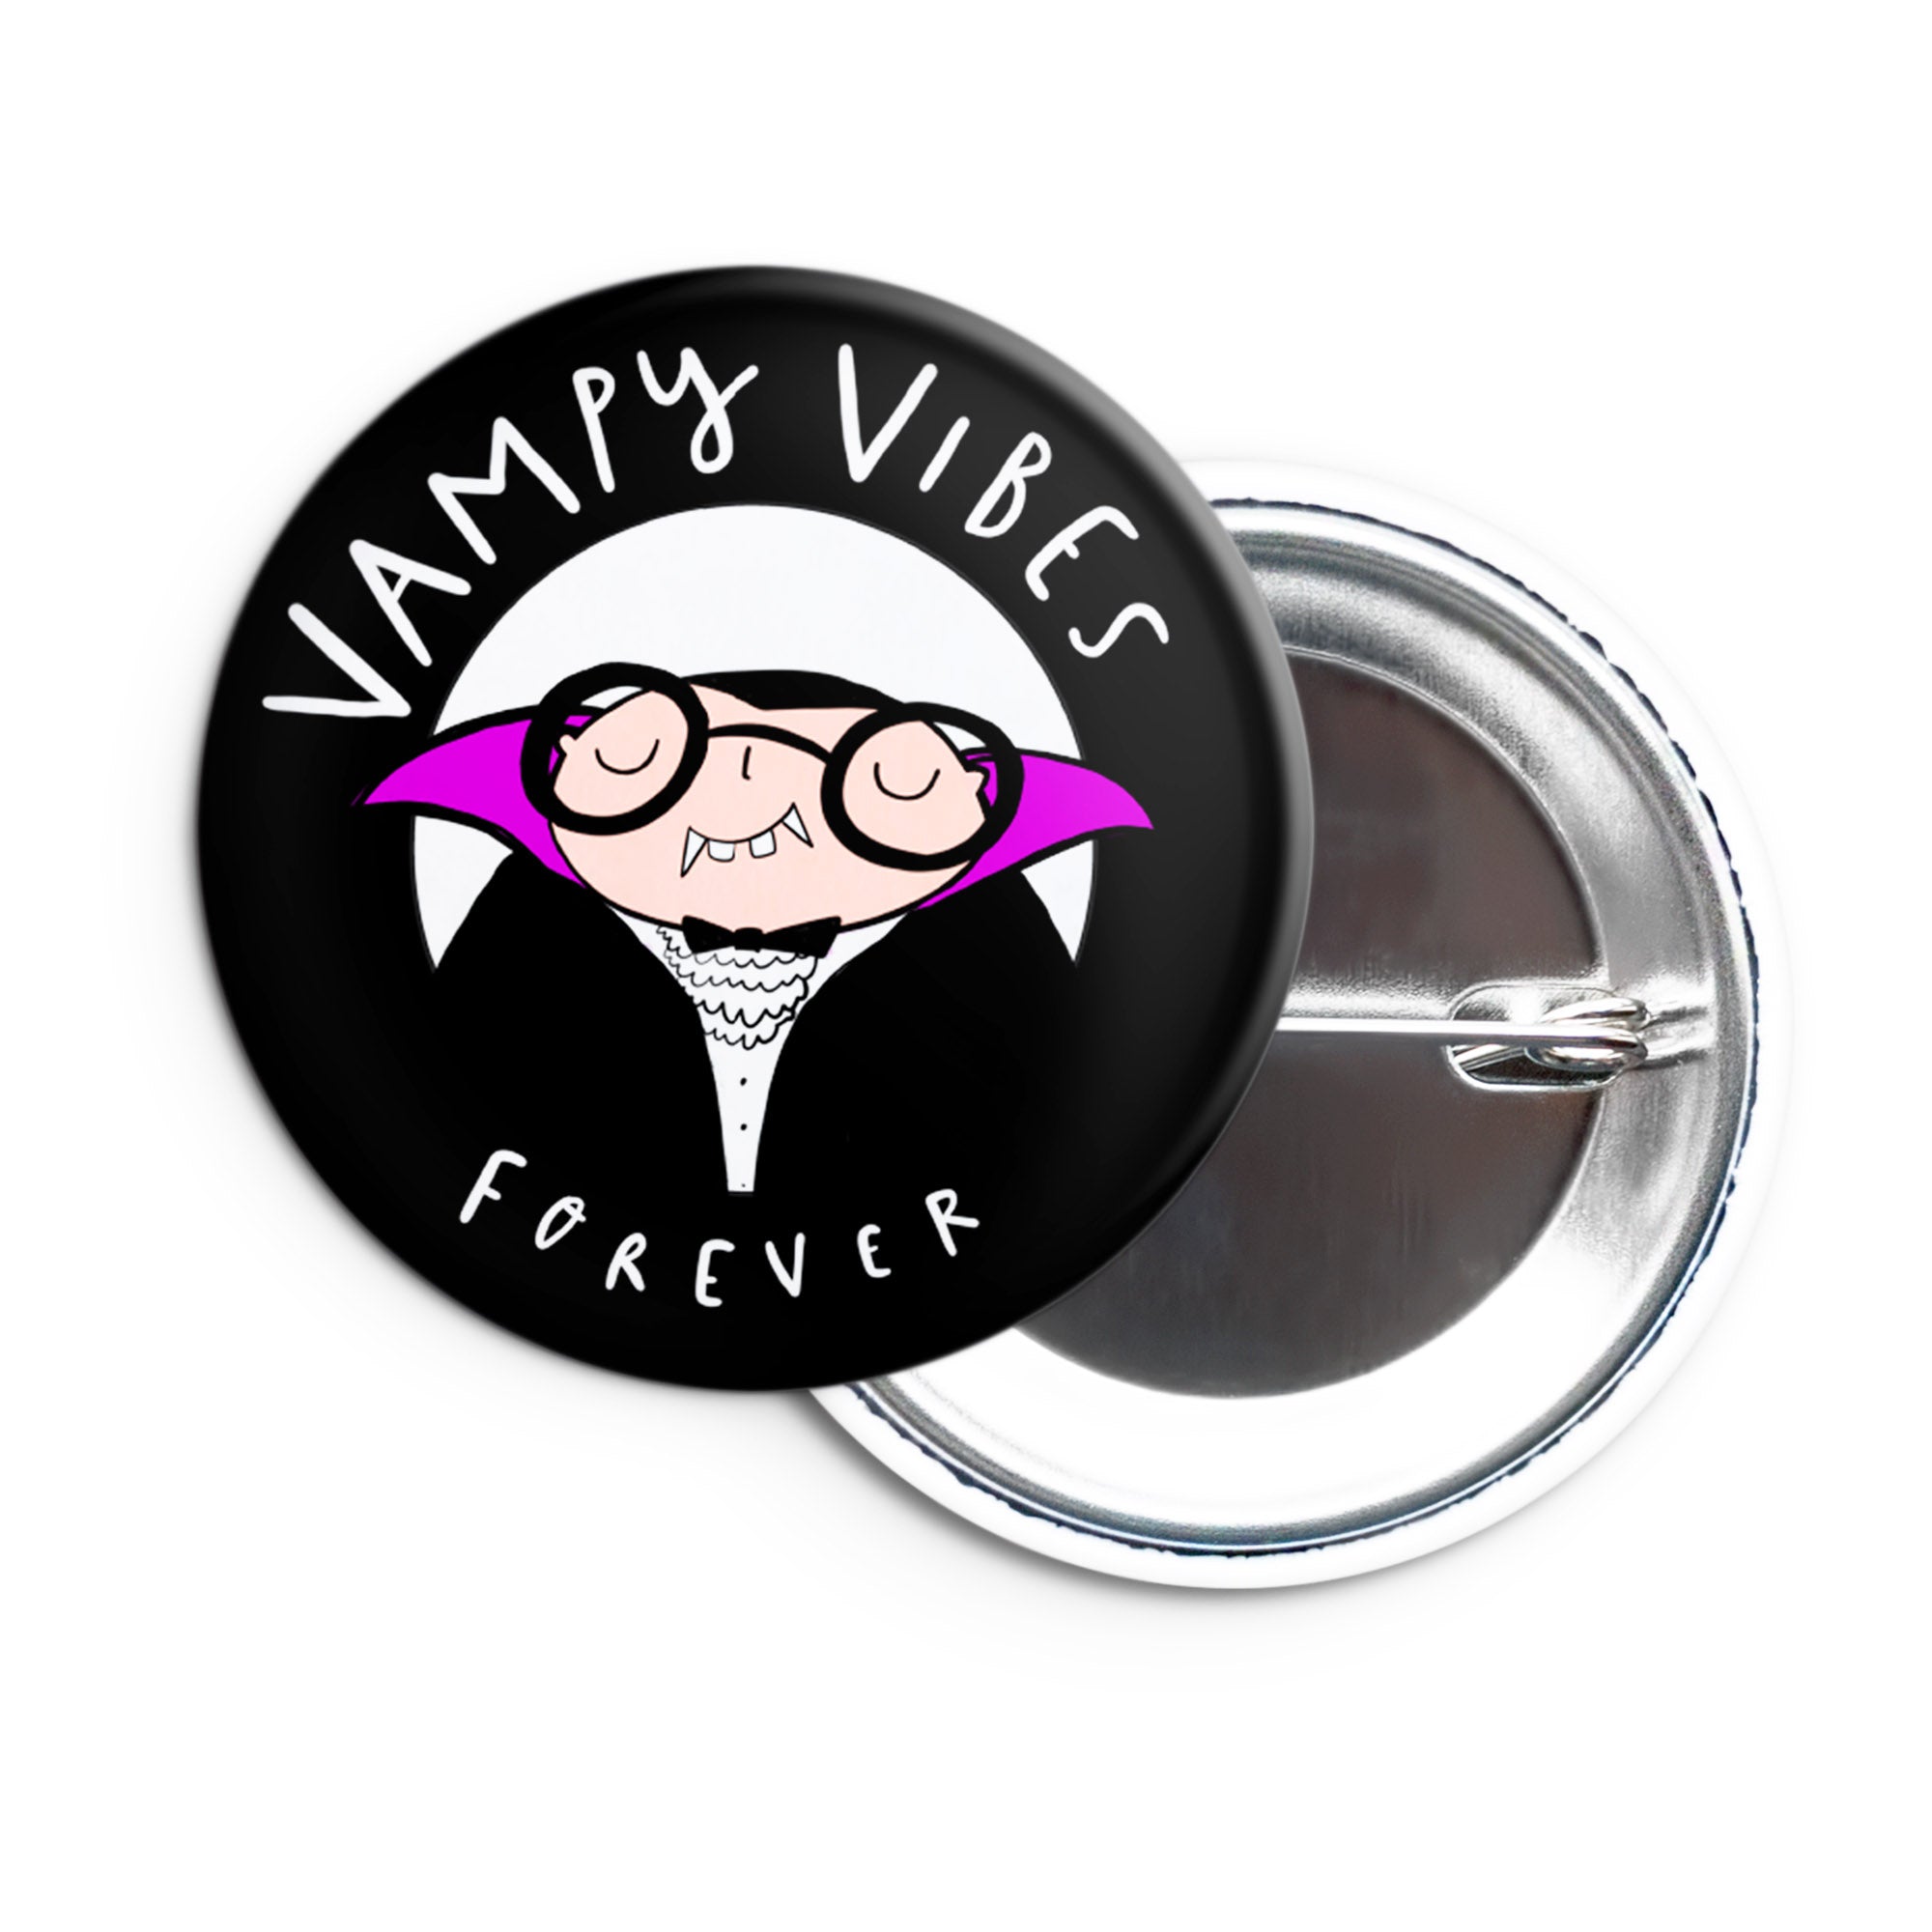 Vampy vibes pin badge